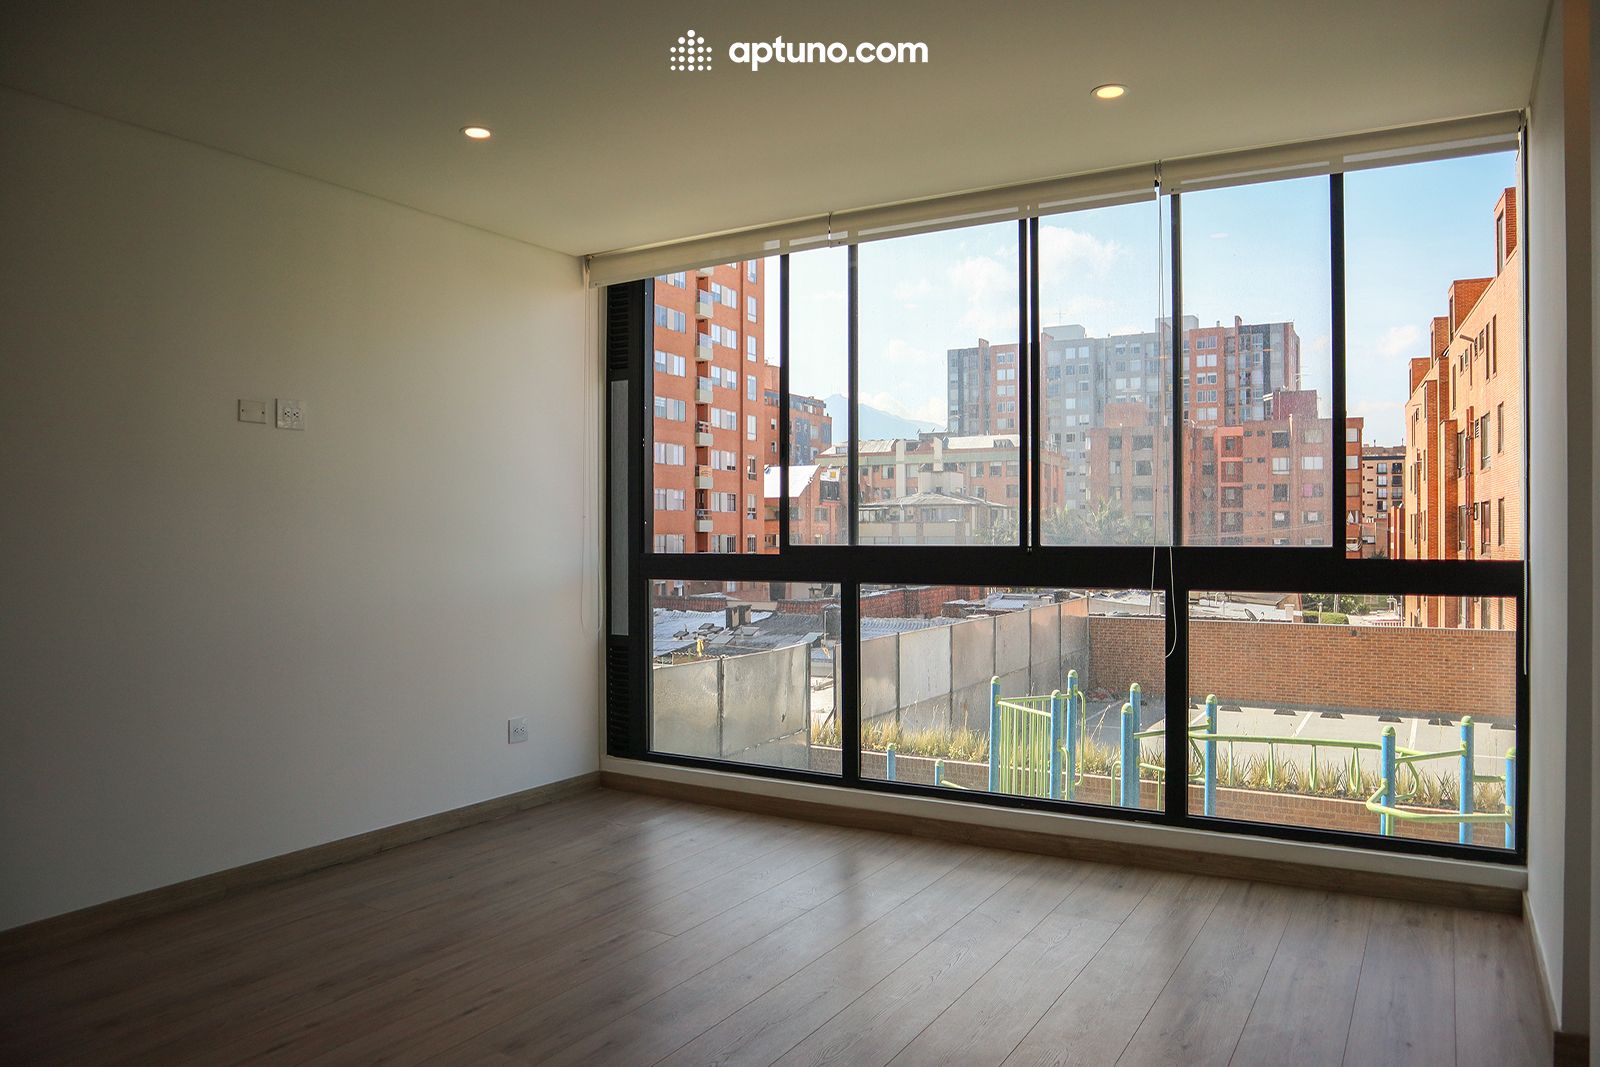 Apartamento en arriendo Acacias Usaquén 70 m² - $ 2.700.000